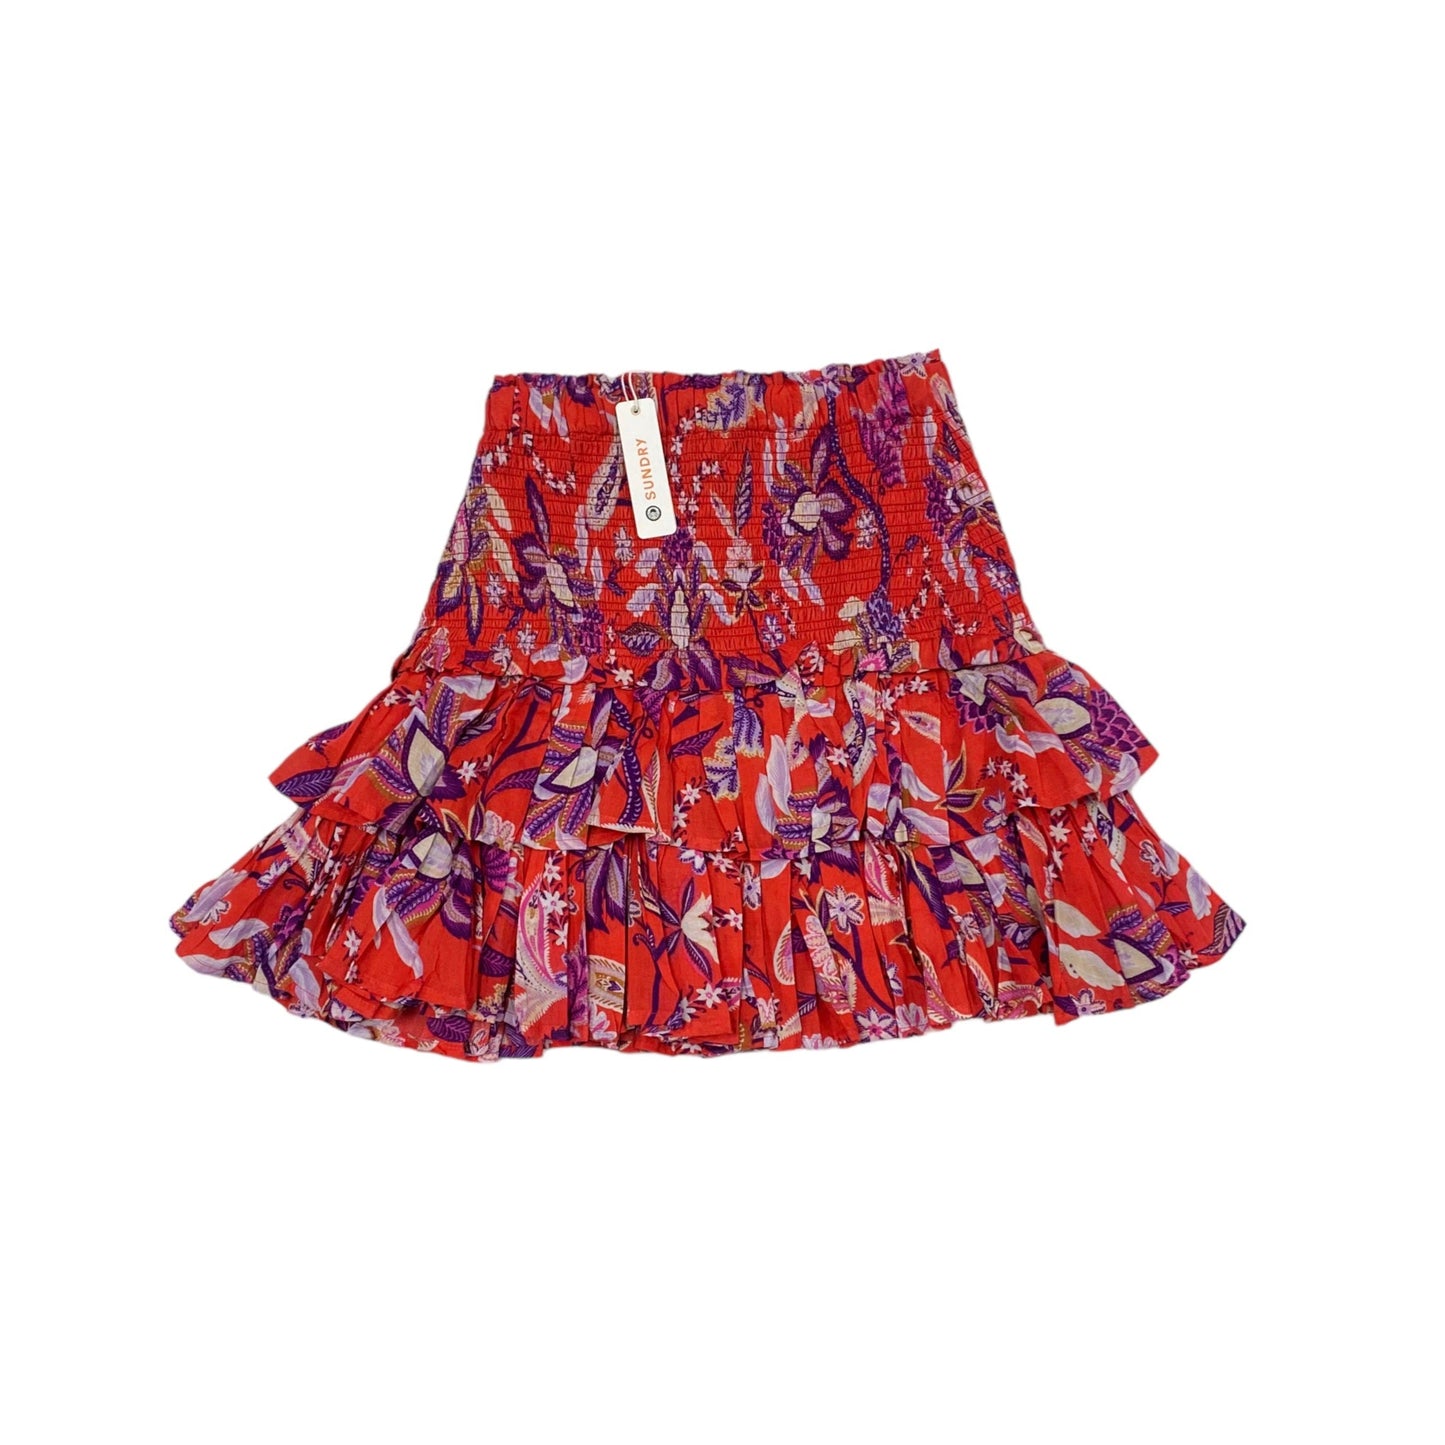 Skirt Midi By Sundry  Size: 0